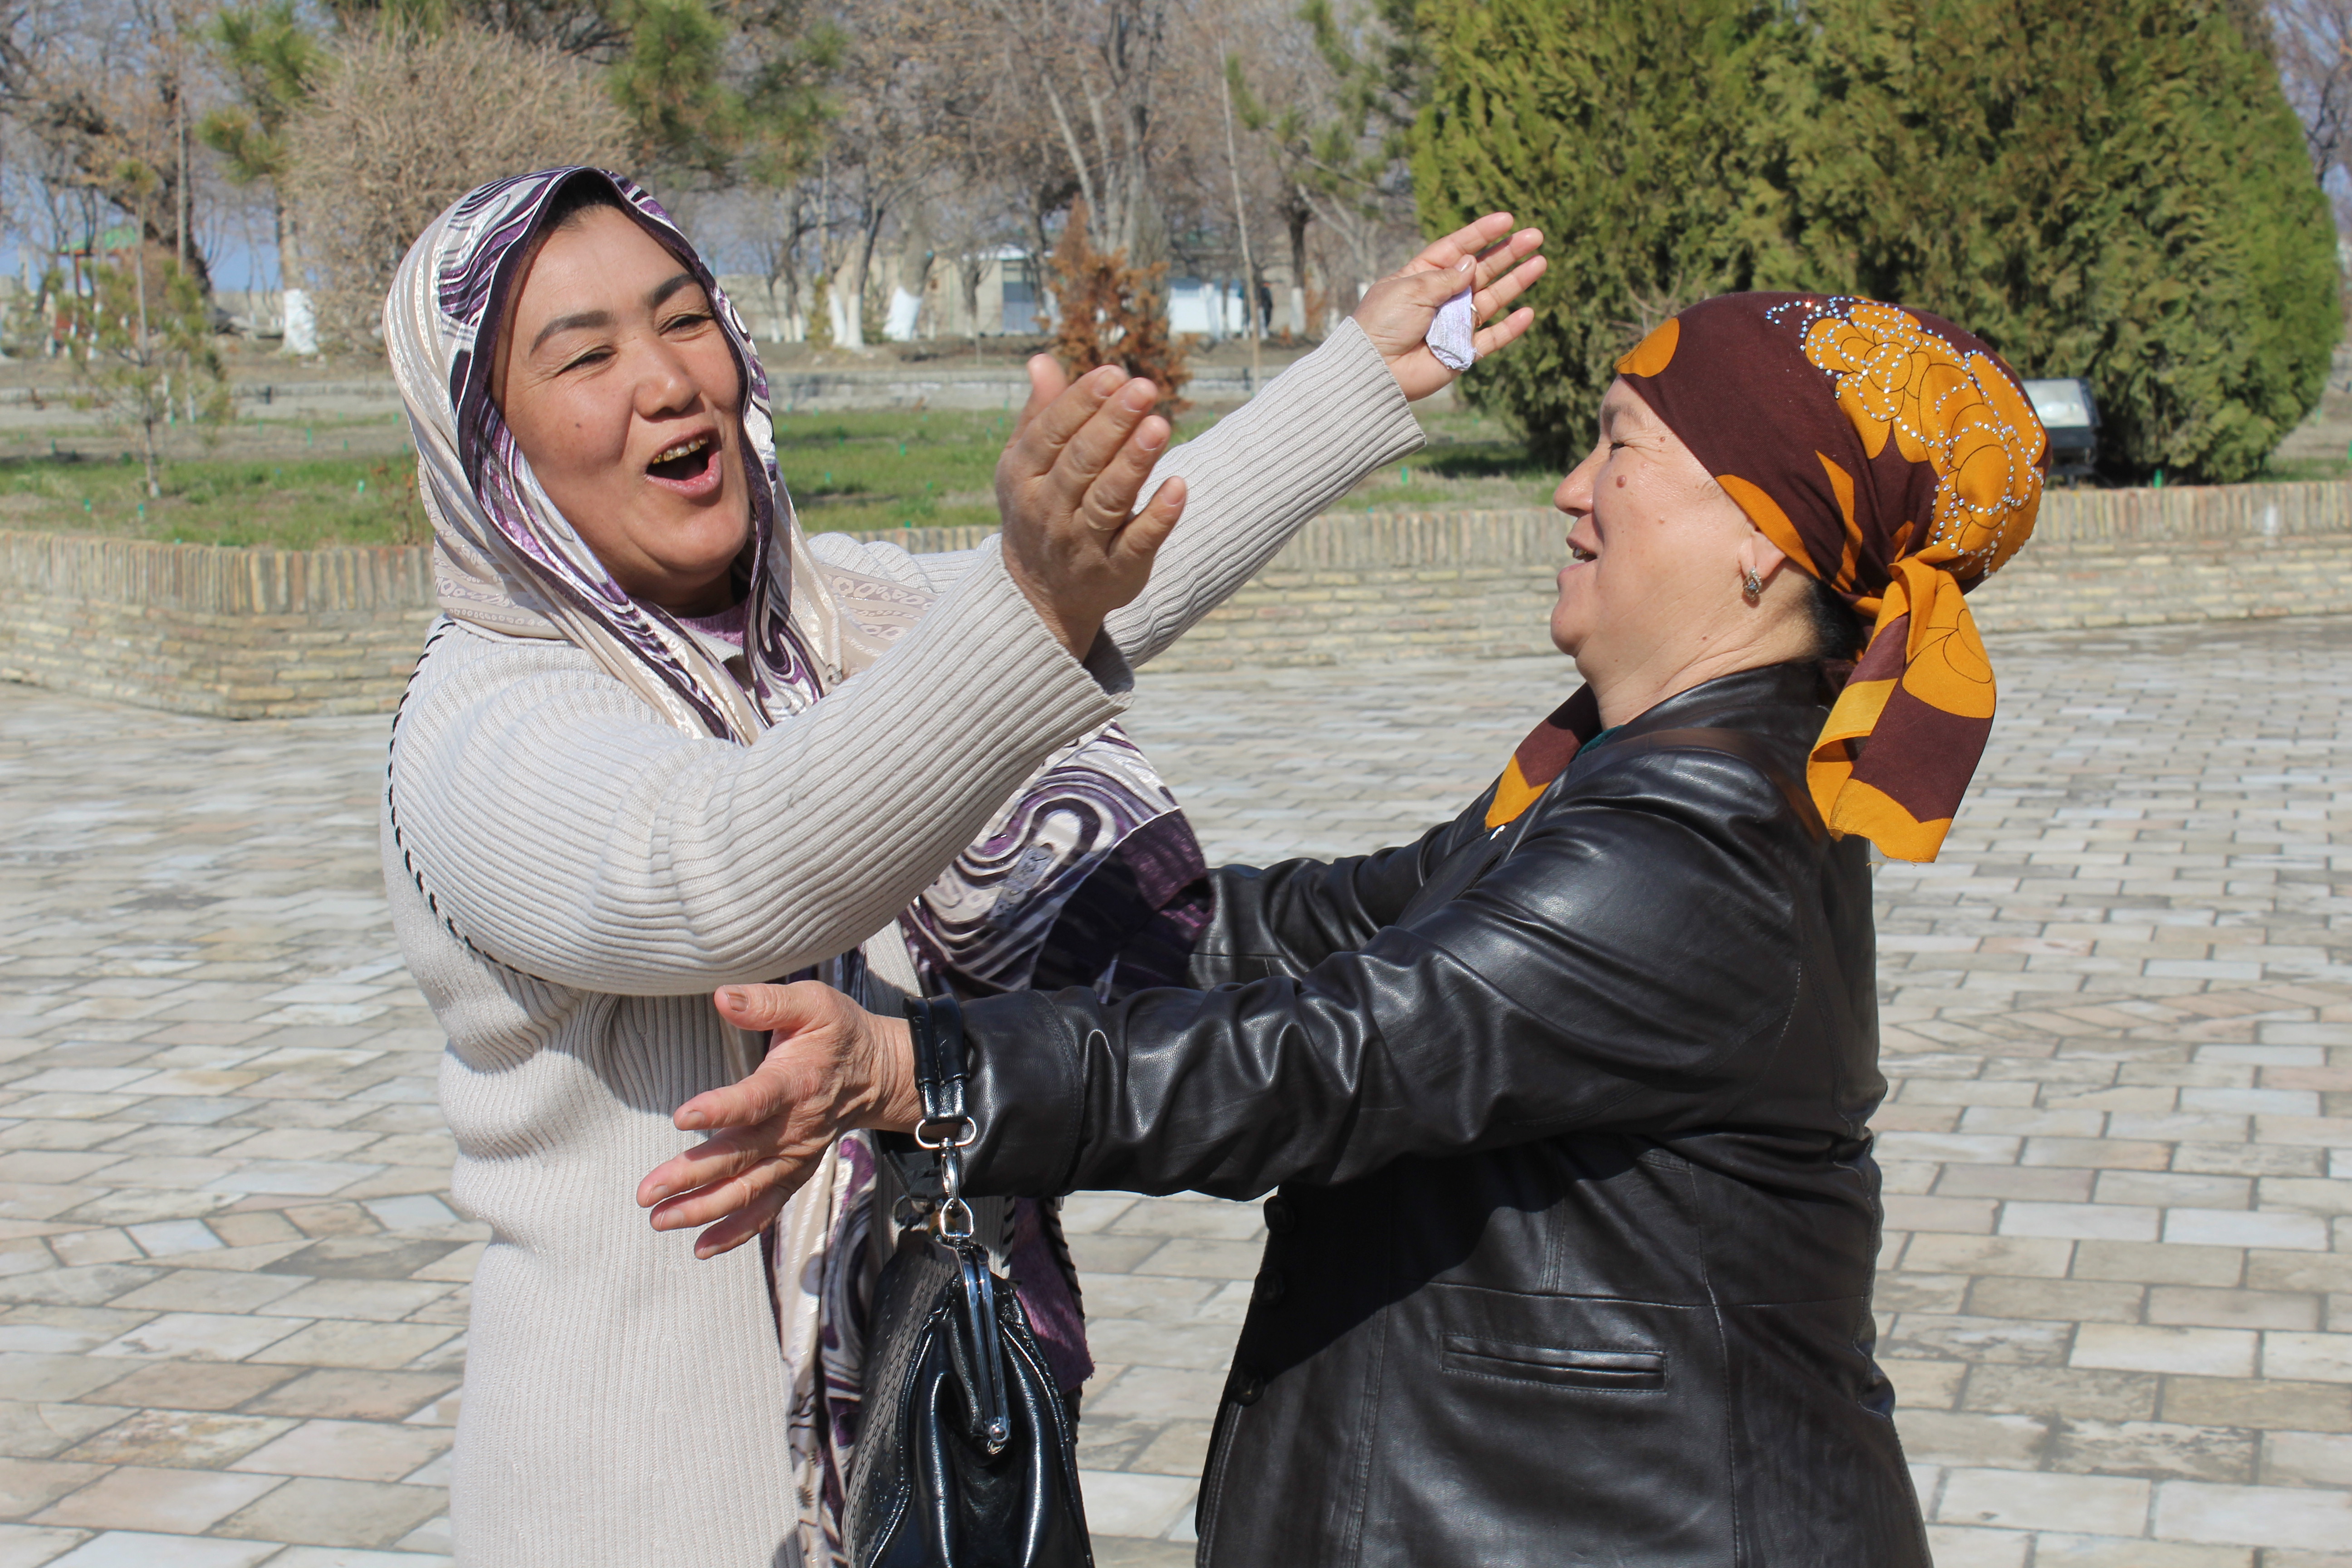 Des femmes Ouzbeks se saluent